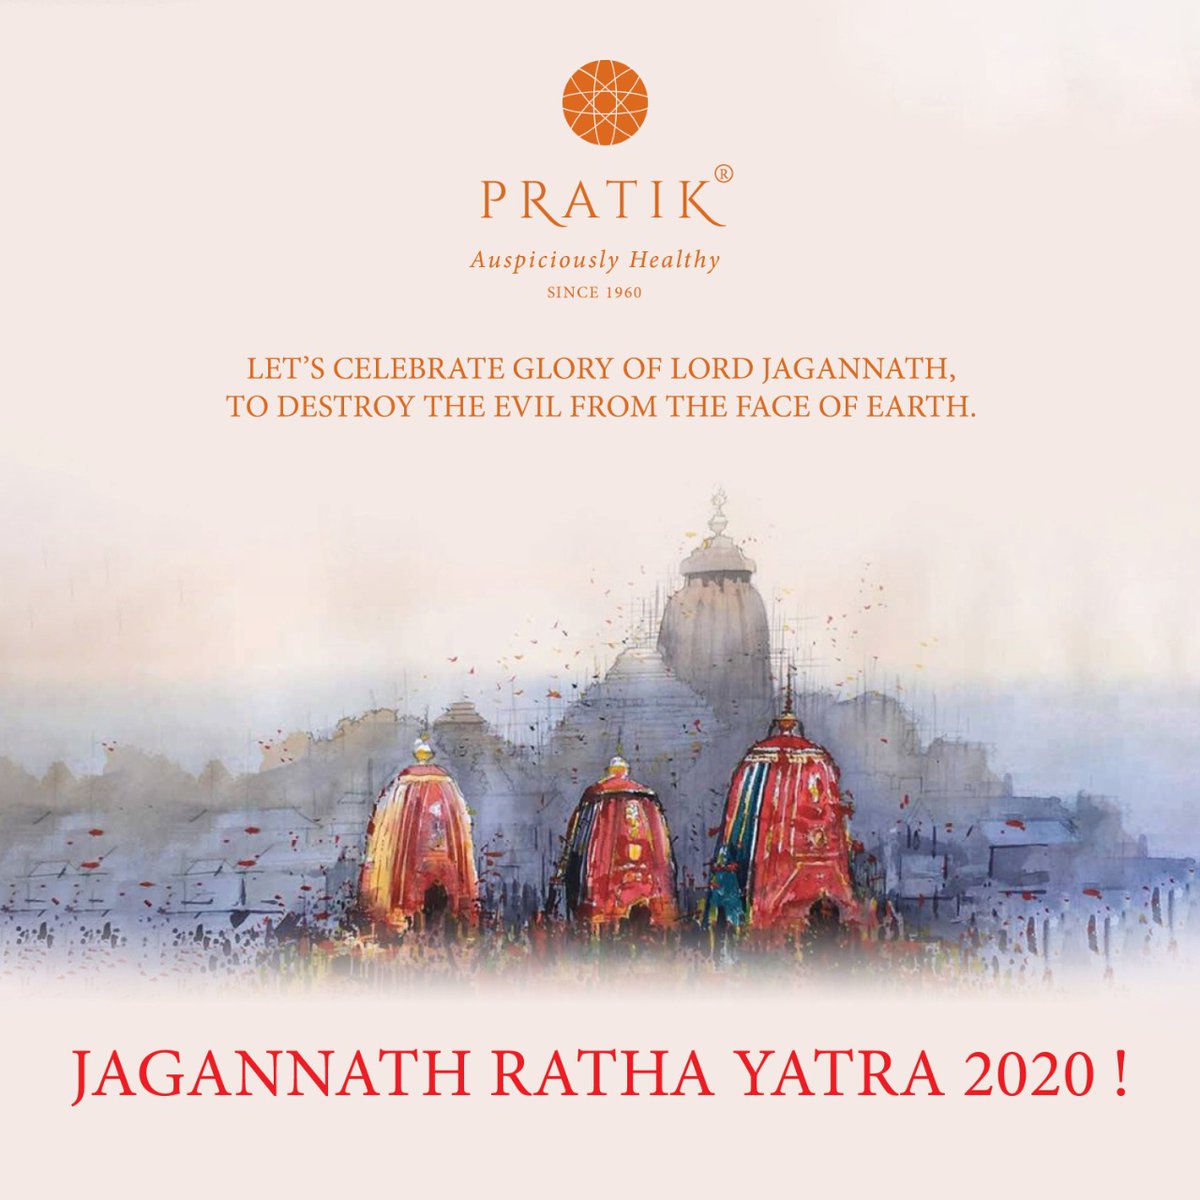 Happy Jagannath Ratha Yatra 2020!  

#rathyatra #rathyatra2020 #rathjatra #rathjatra2020 #LordJagannath #love #strength #joy #happiness #hindufestival #holyfestival #festivemood #goodvibes  #festivevibes #HappyJagannathRathaYatra2020 #HappyRathaYatra2020 #happyrathayatra